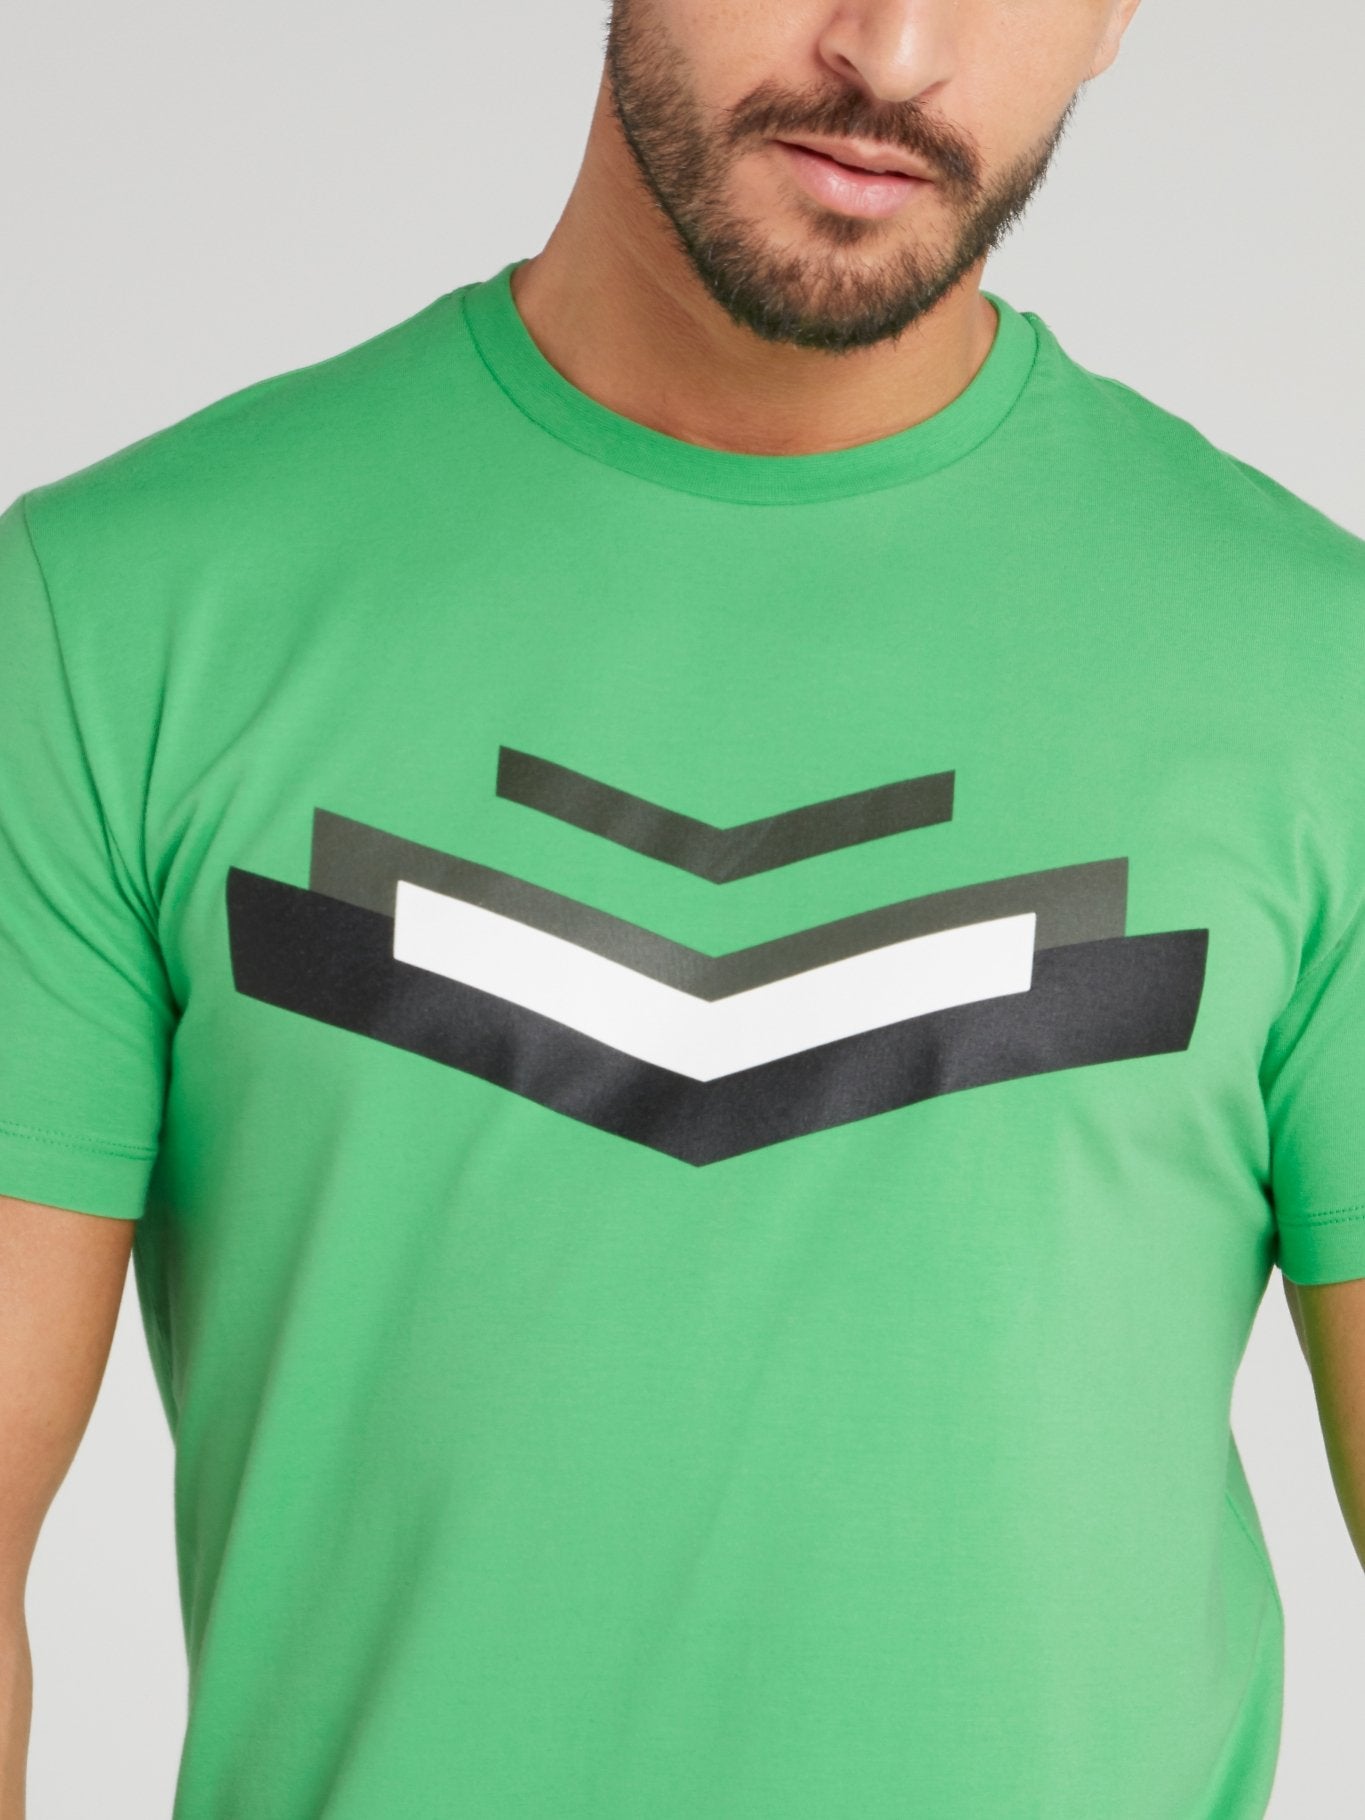 Green Chevron Cotton T-Shirt